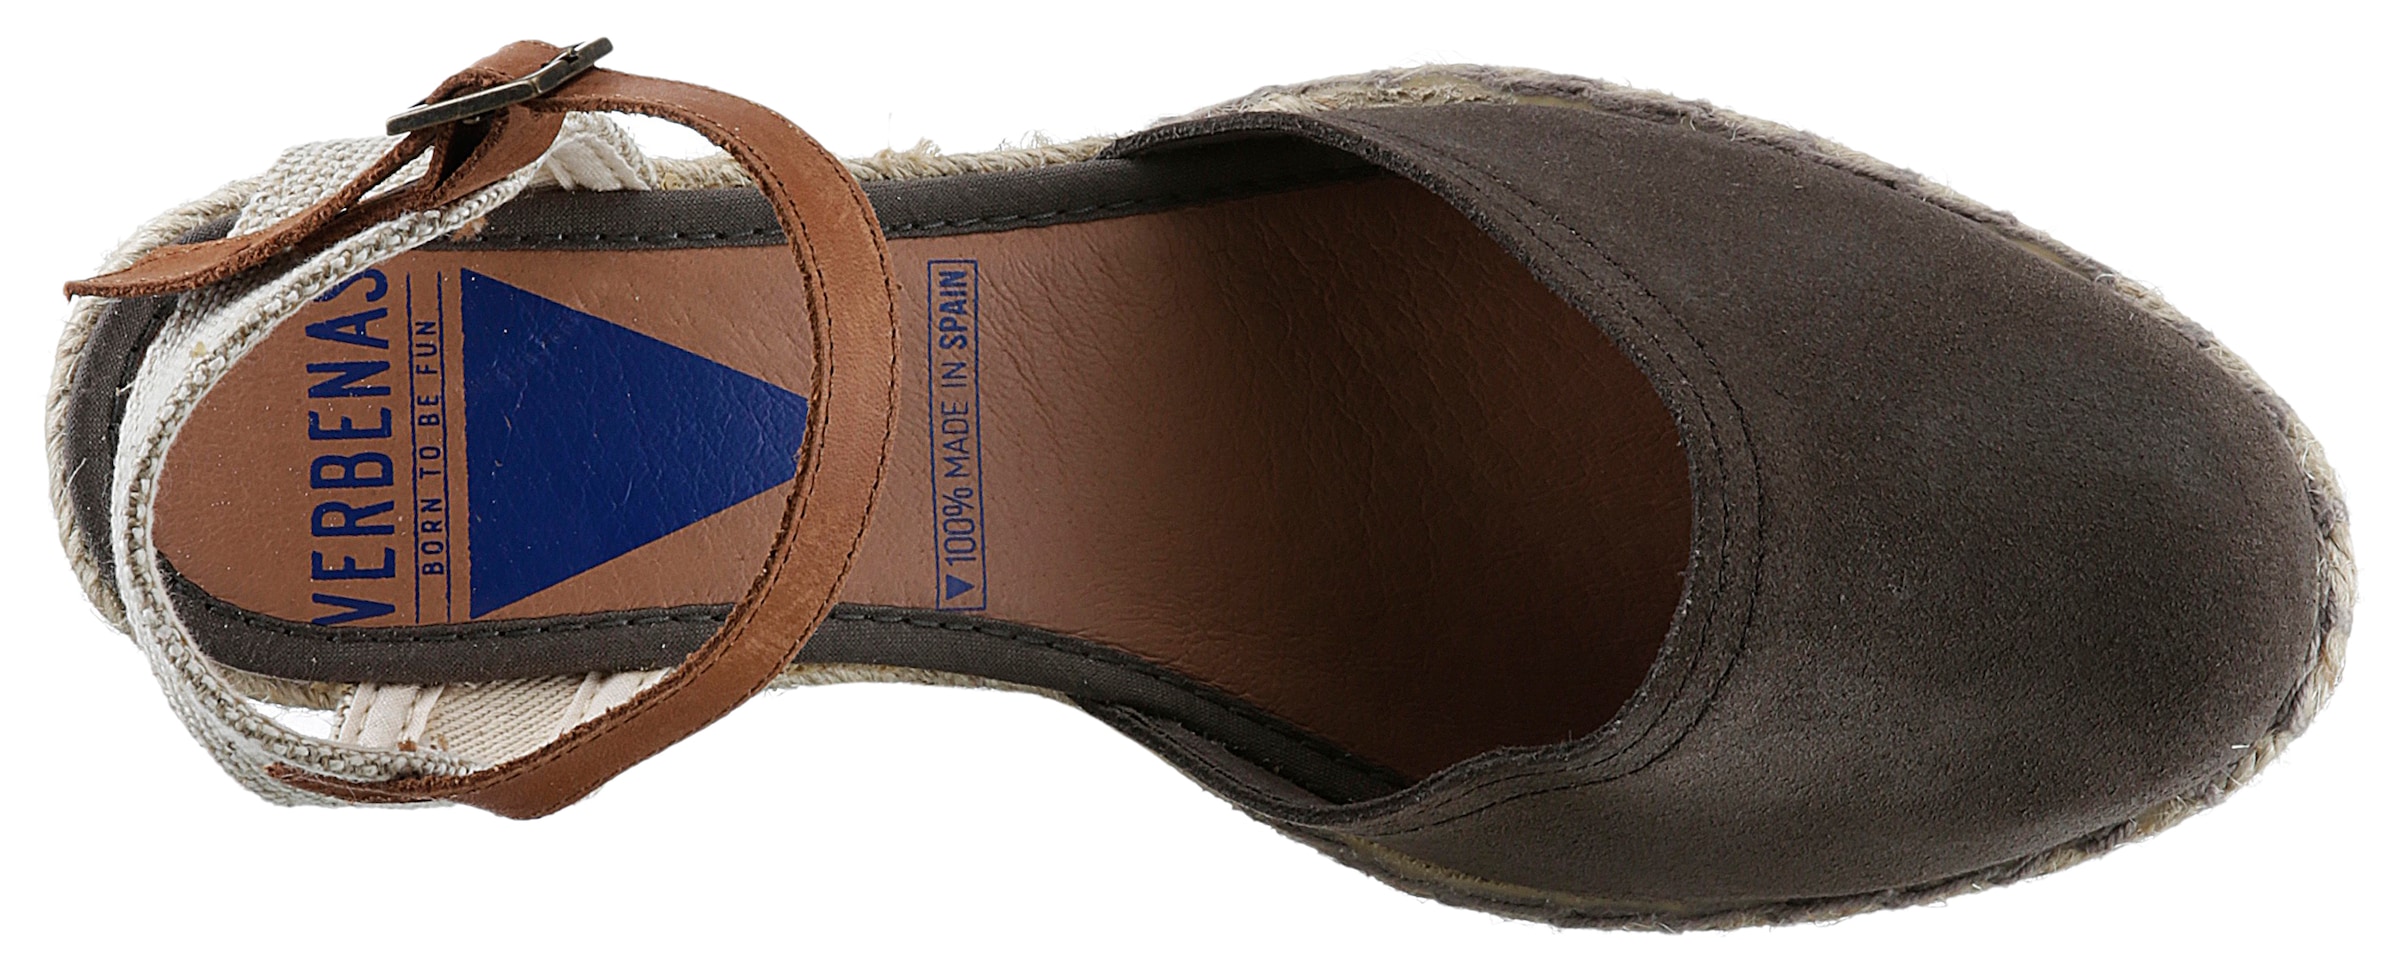 VERBENAS Sandalette, Sommerschuh, Sandale, mit Bast bezogenem Keilabsatz